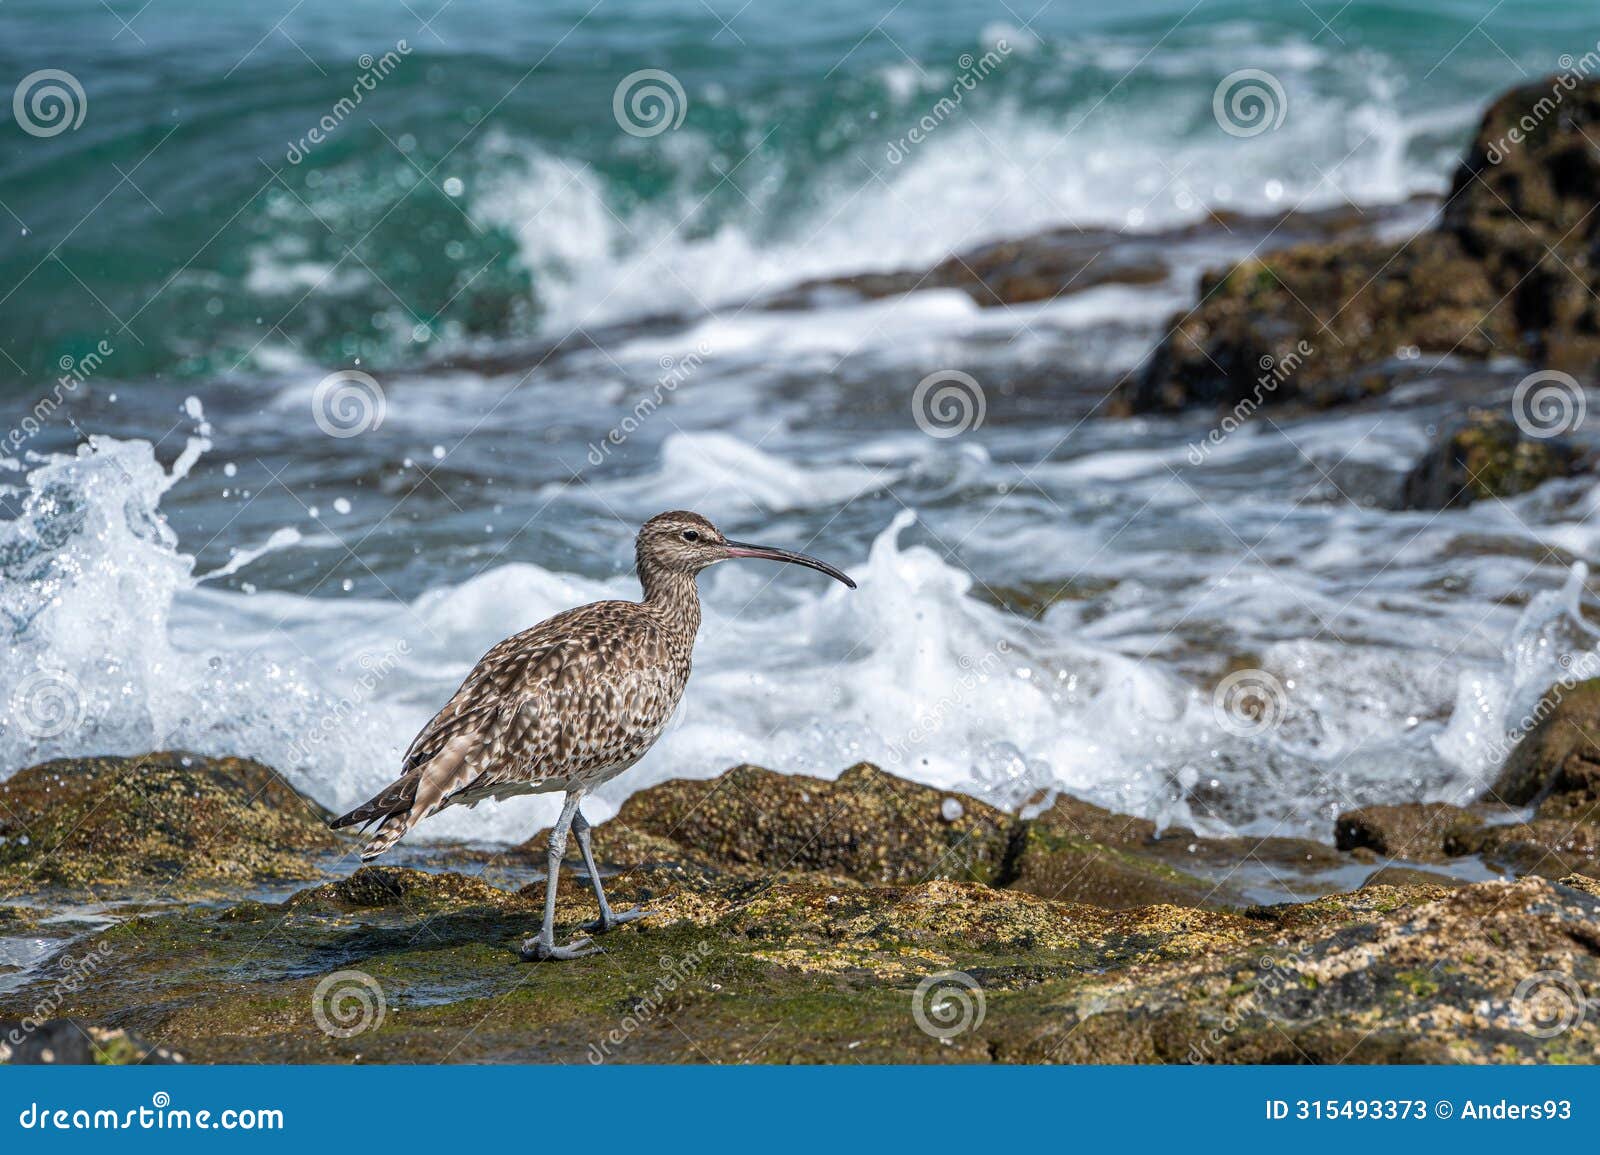 eurasian curlew, numenius arquata, and sandpipers searching for food along a rocky coast, costa calma, fuerteventura, spain